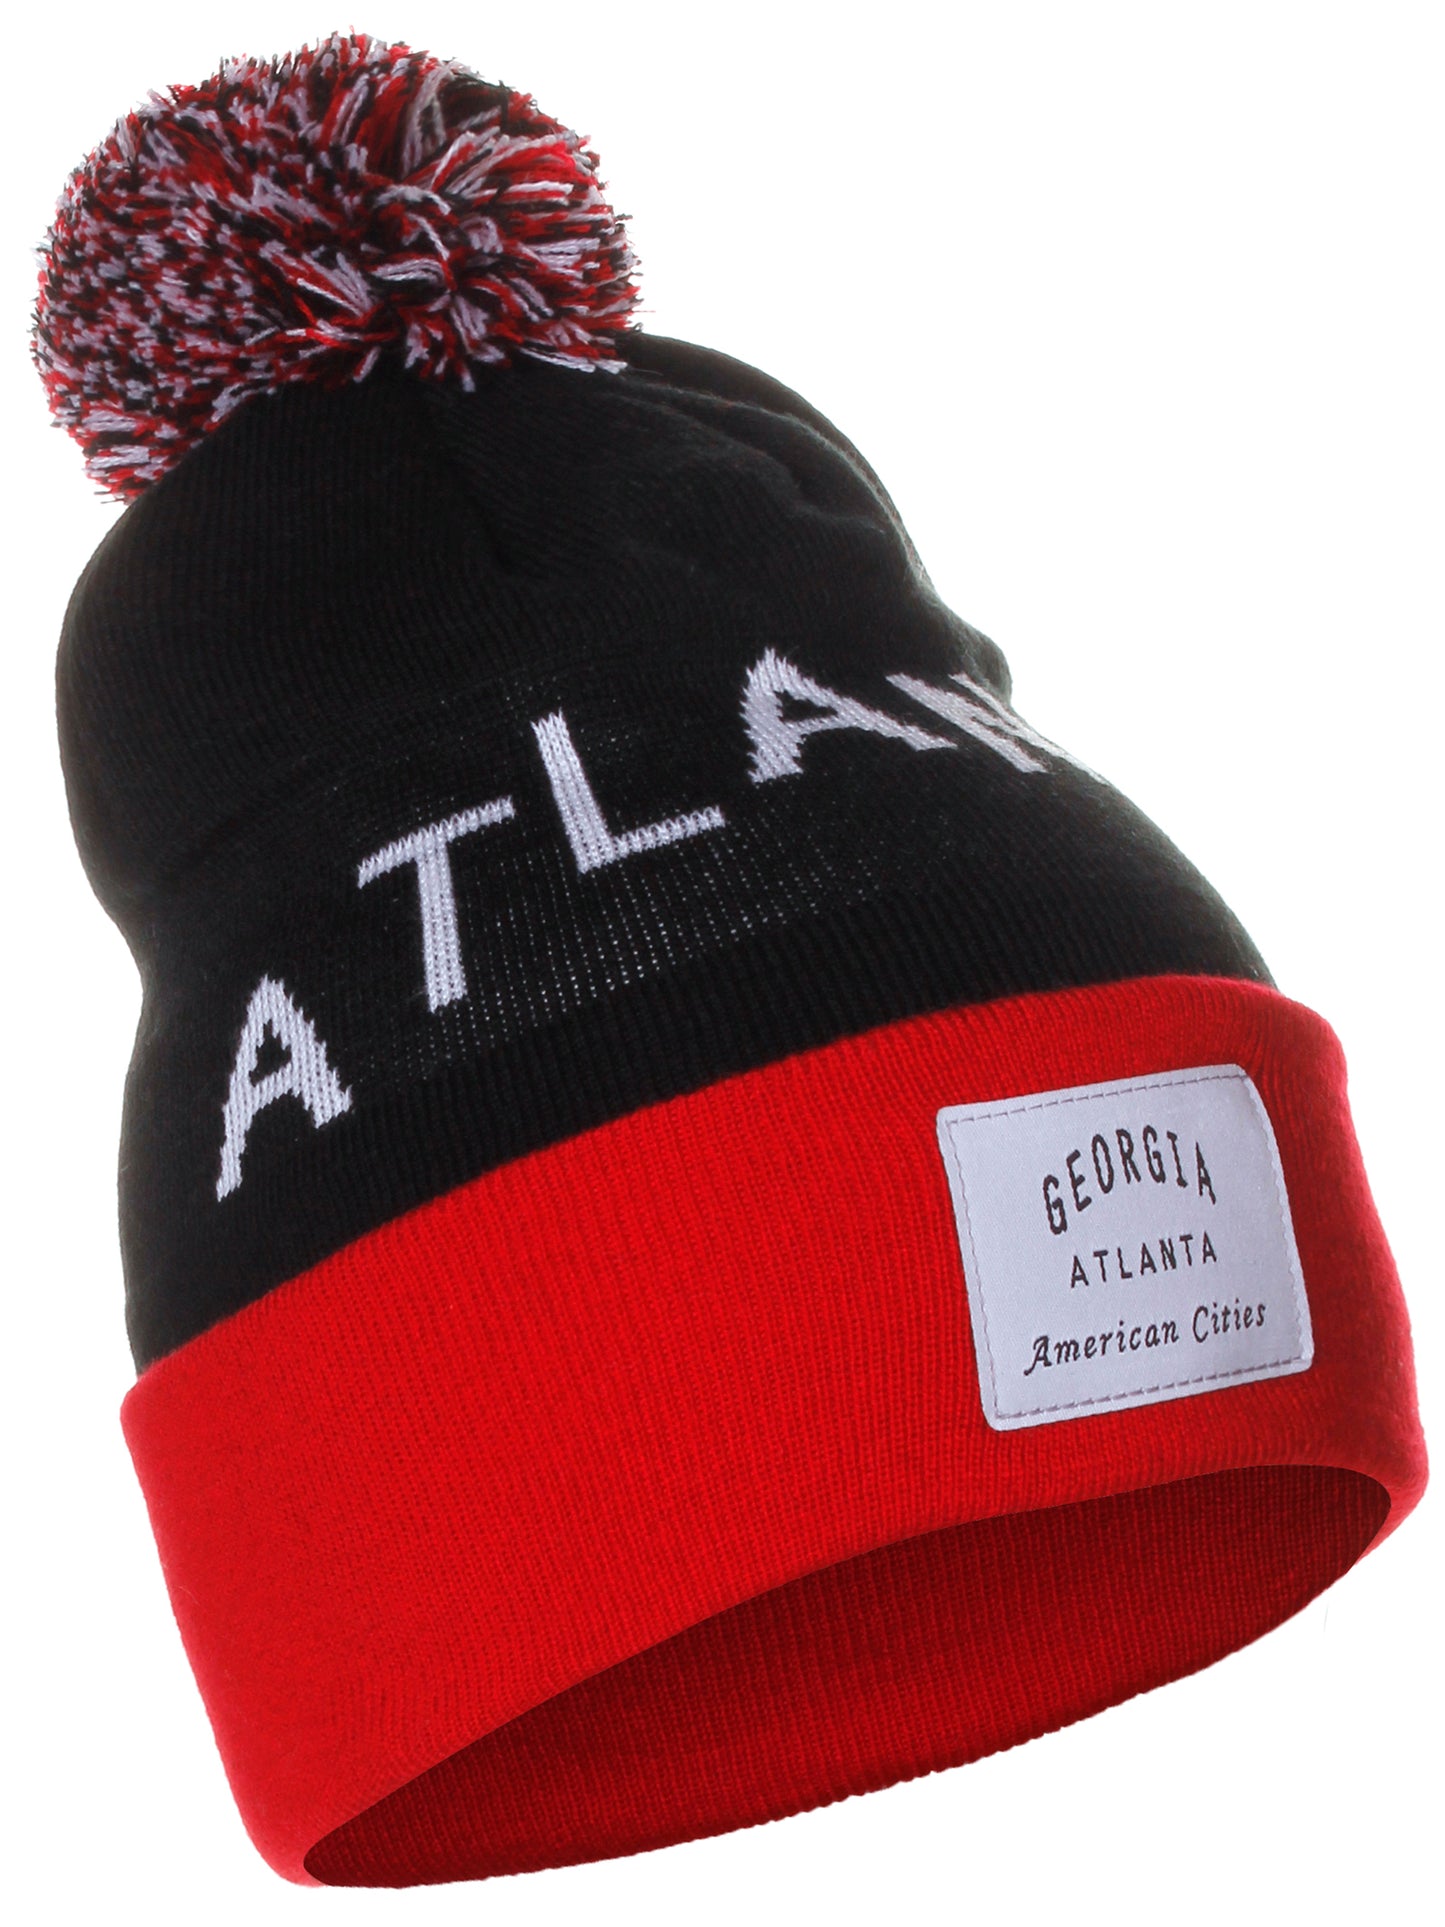 American Cities Atlanta Georgia Arch Letters Pom Pom Knit Hat Cap Beanie